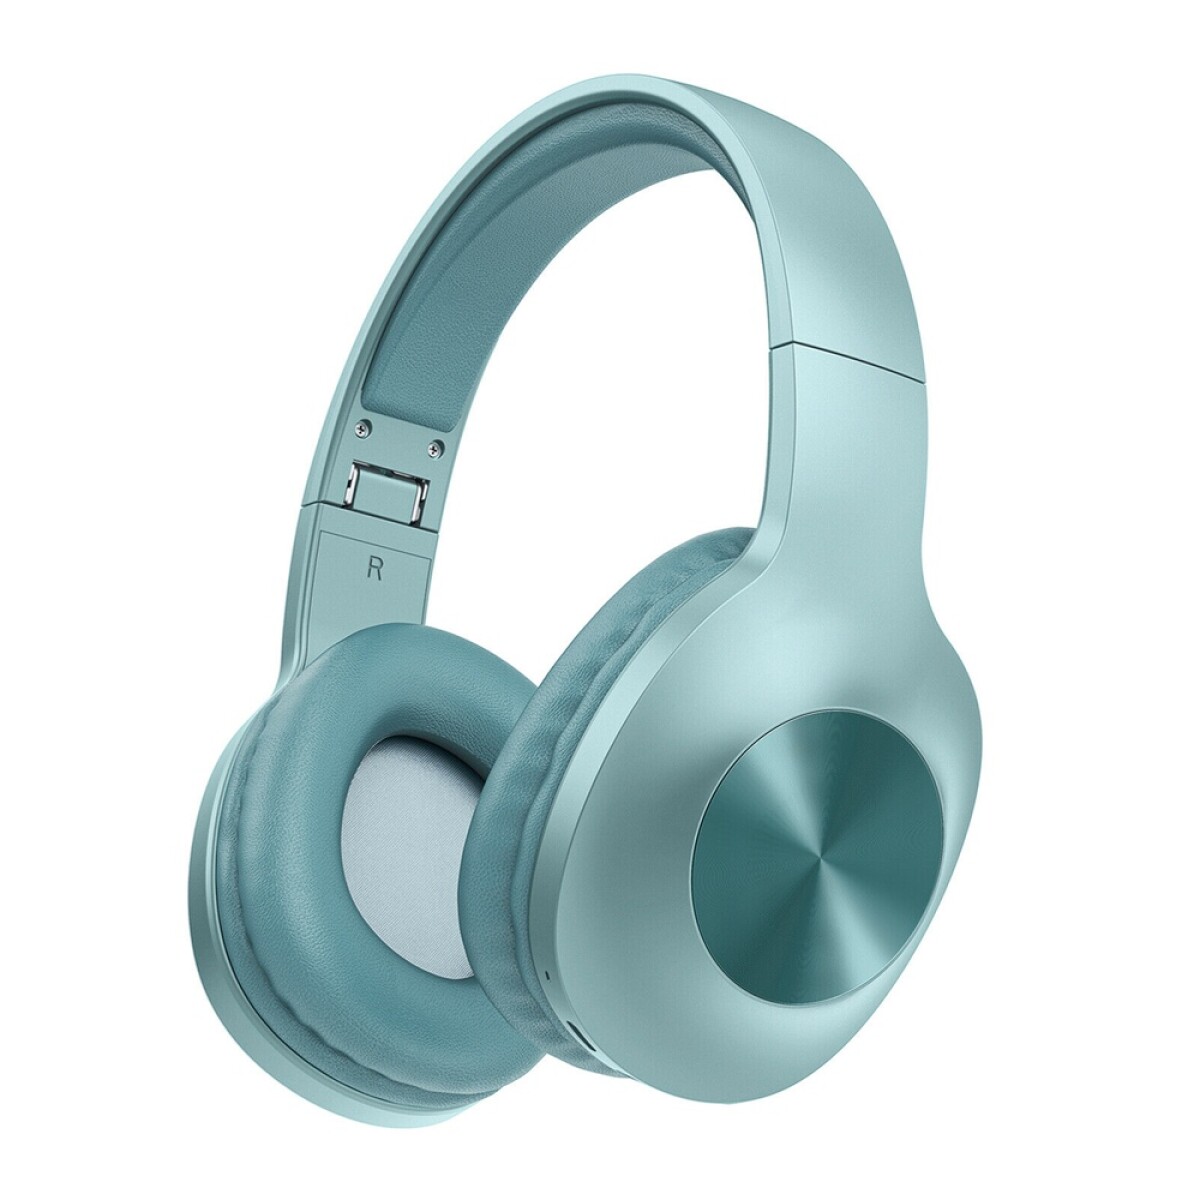 Auriculares Vincha Inalámbricos Bluetooth 5.0 Letscom H10 - Celeste 